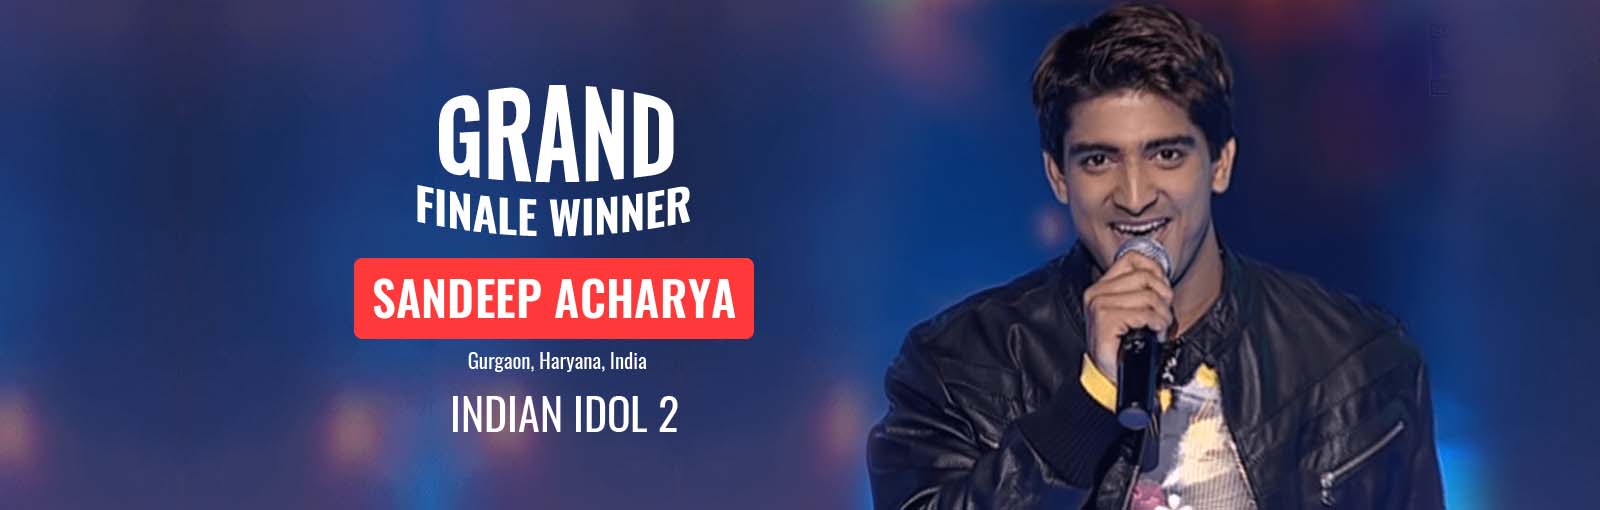 Indian Idol 1